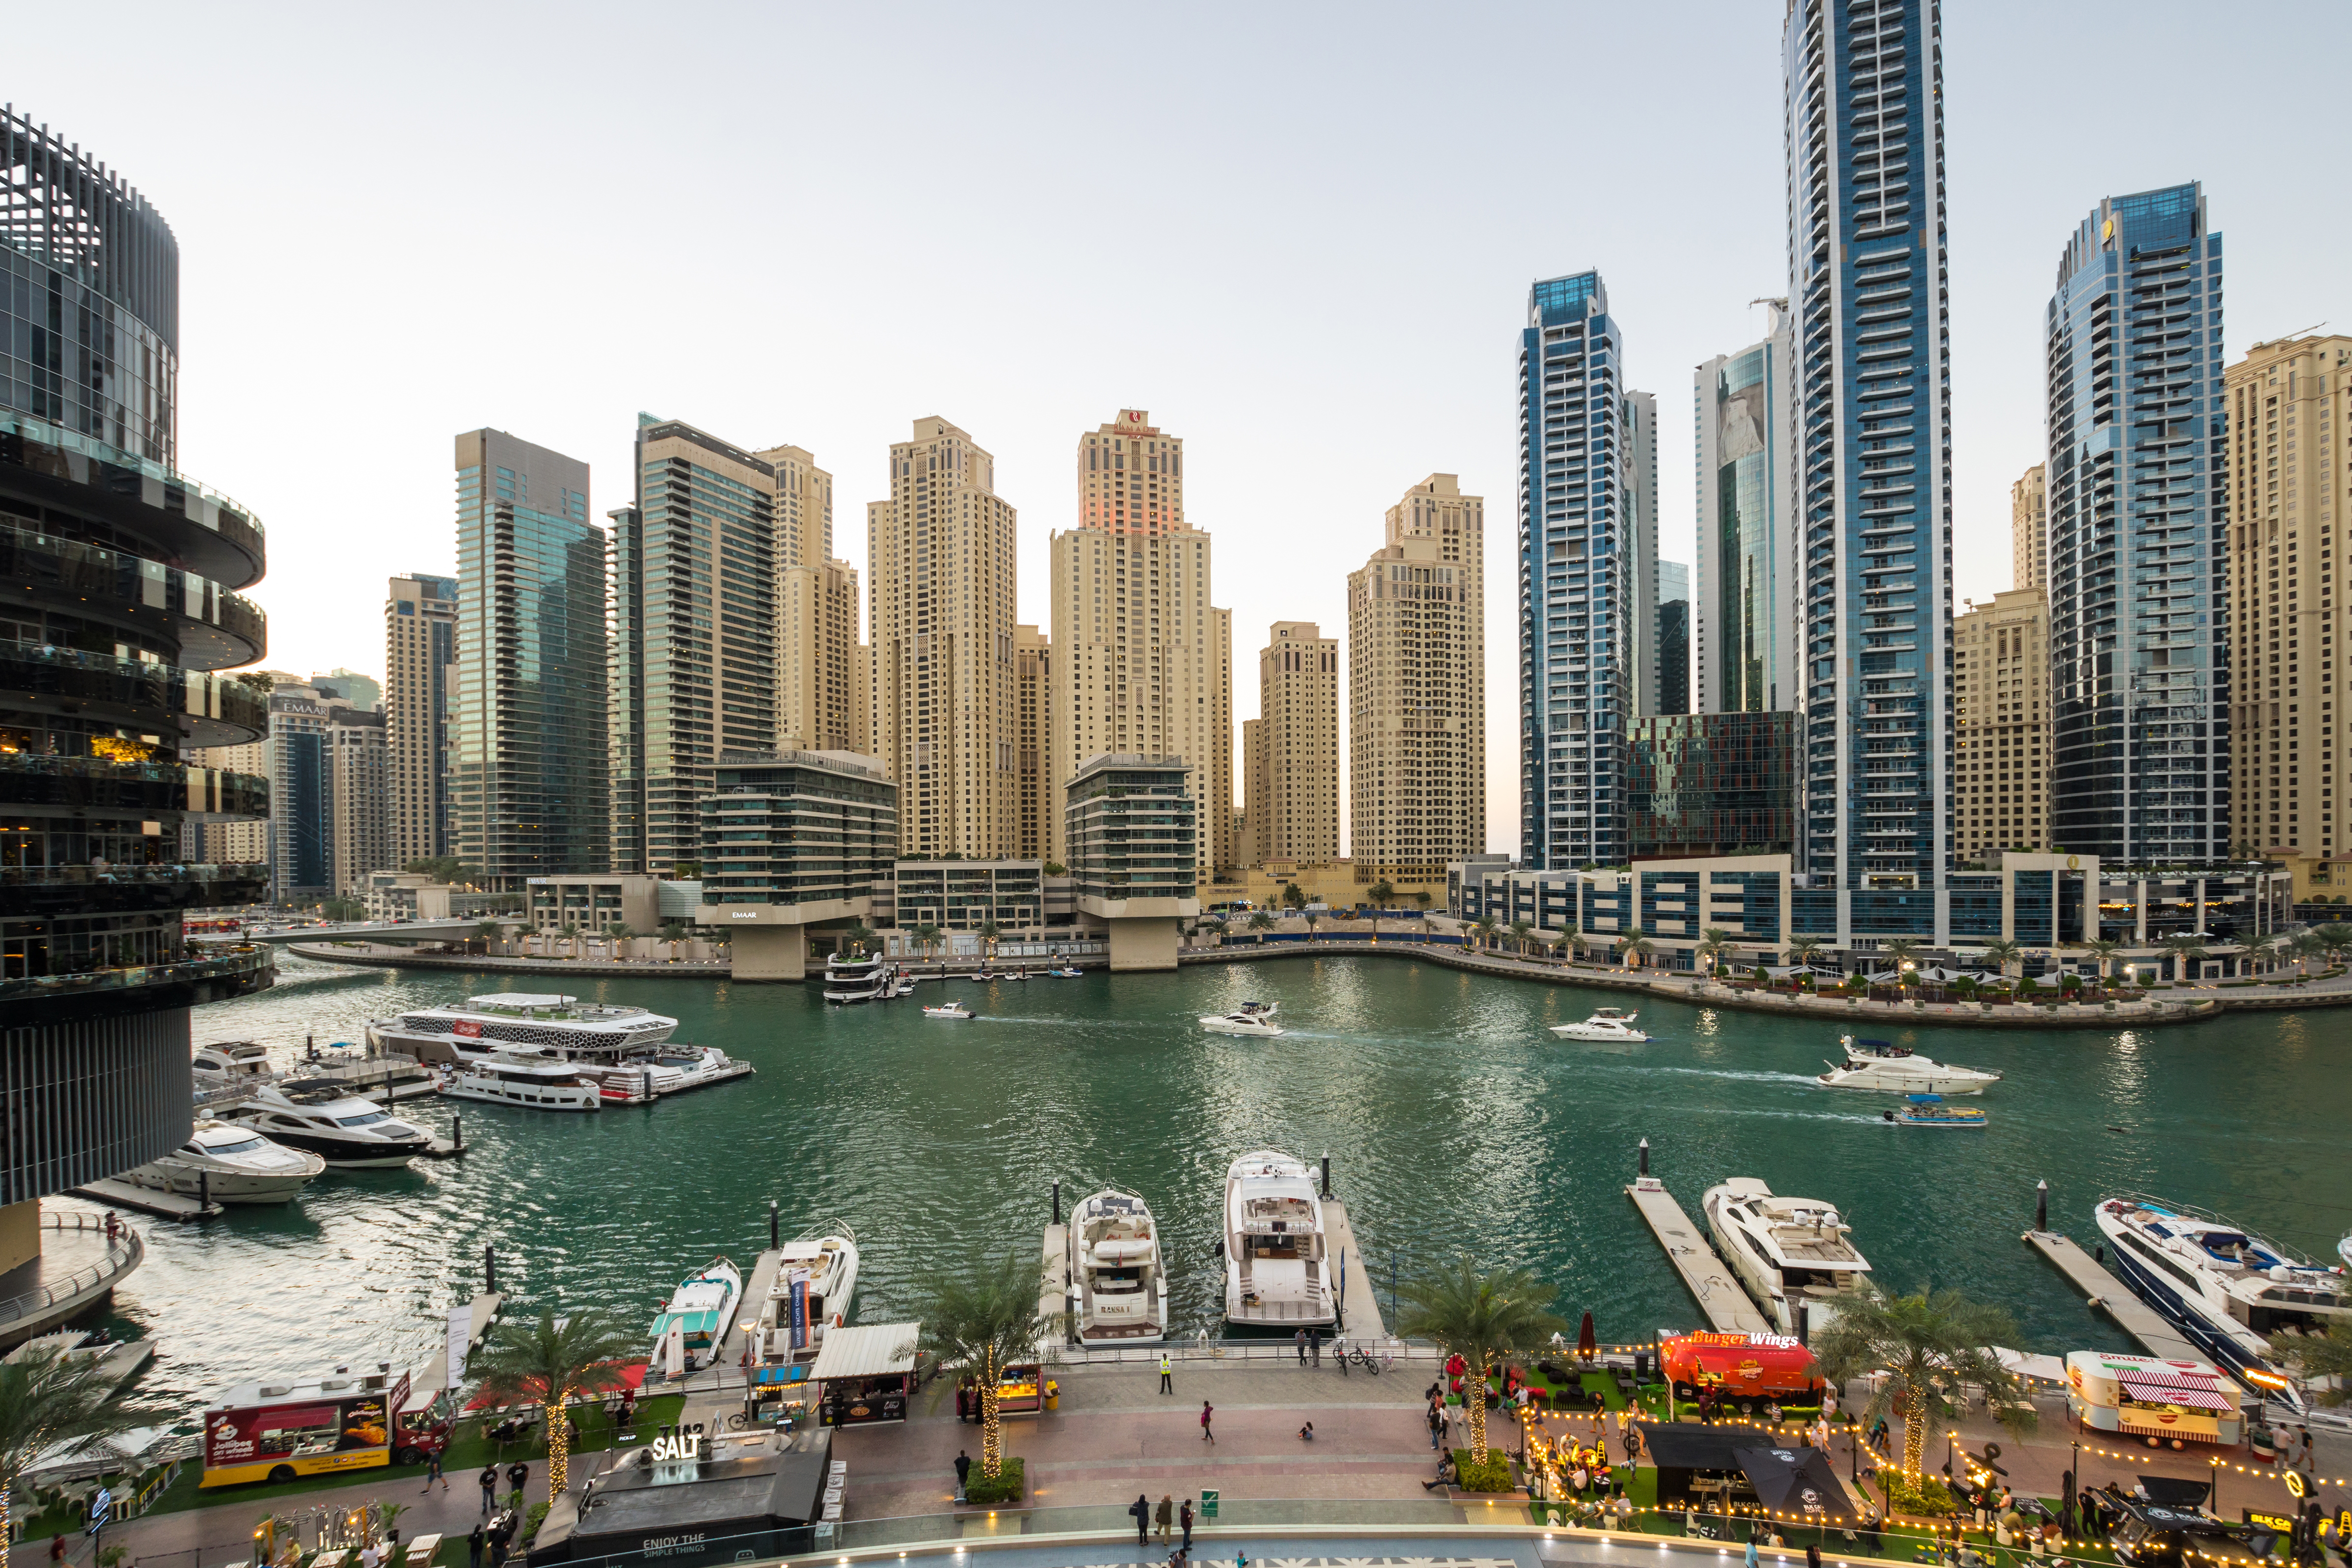 Dubai, a city where can obtain UAE citizenship